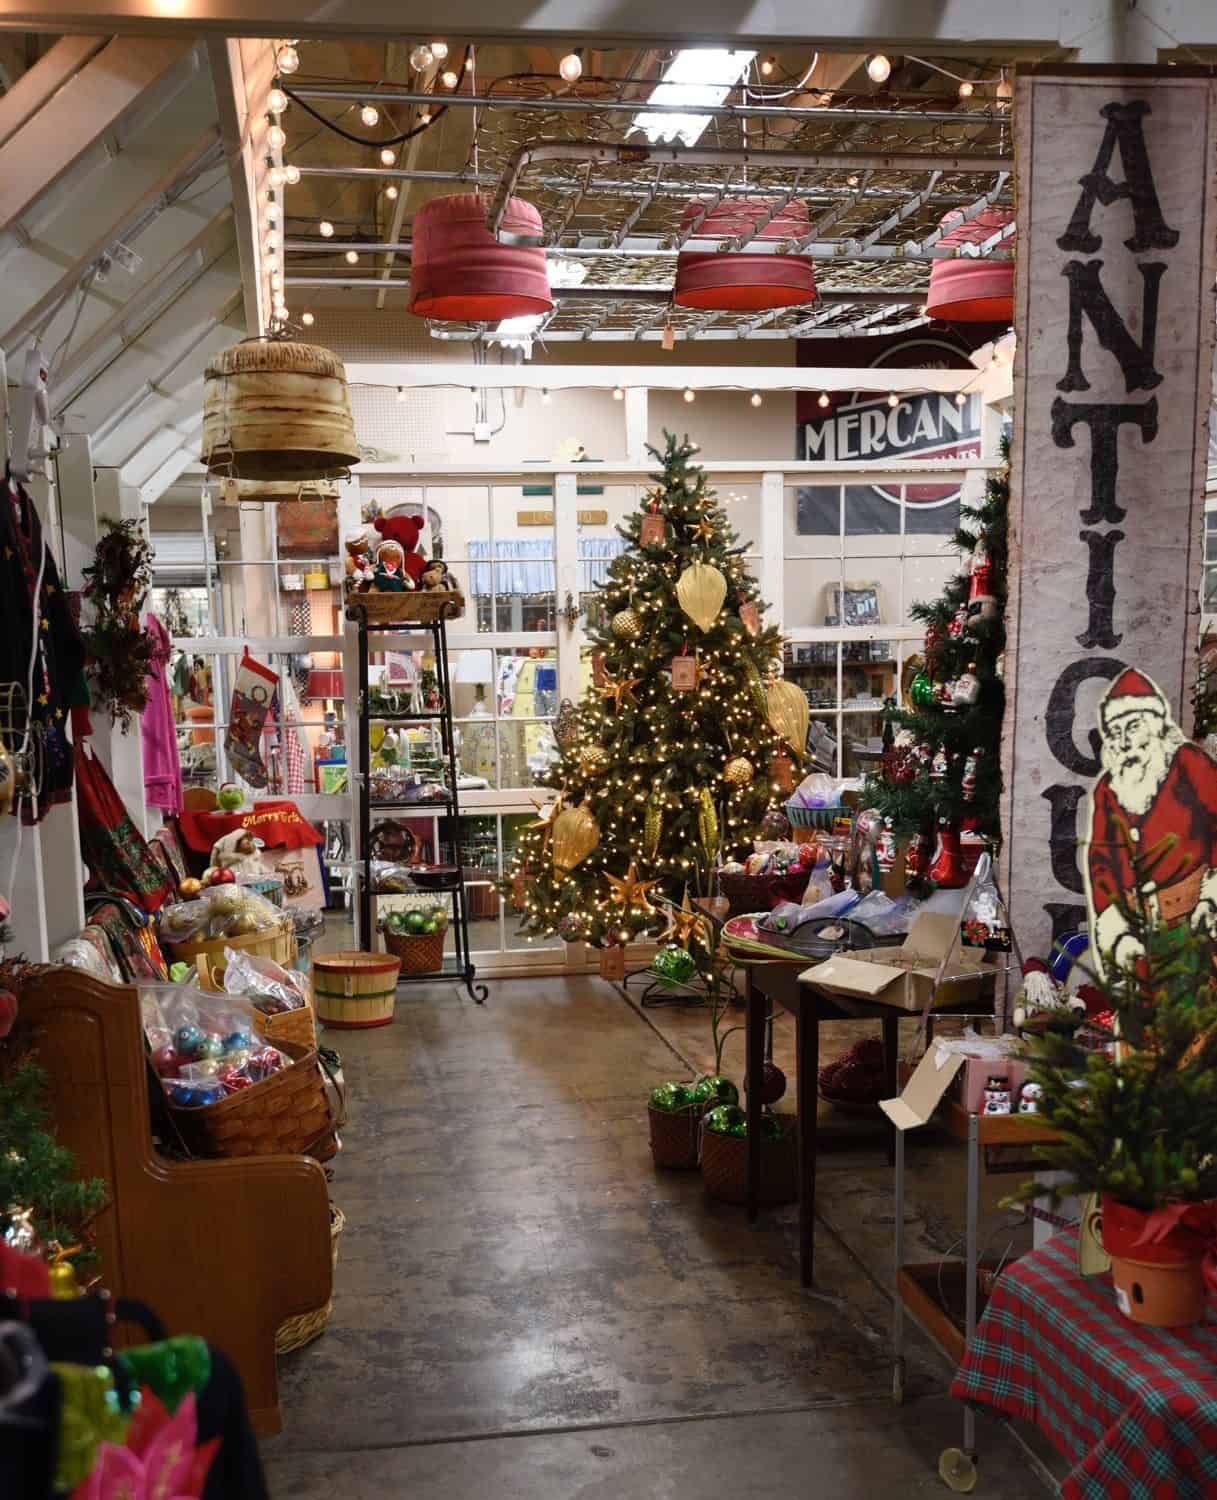 Christmas in July Sale Midtown Mercantile Merchants